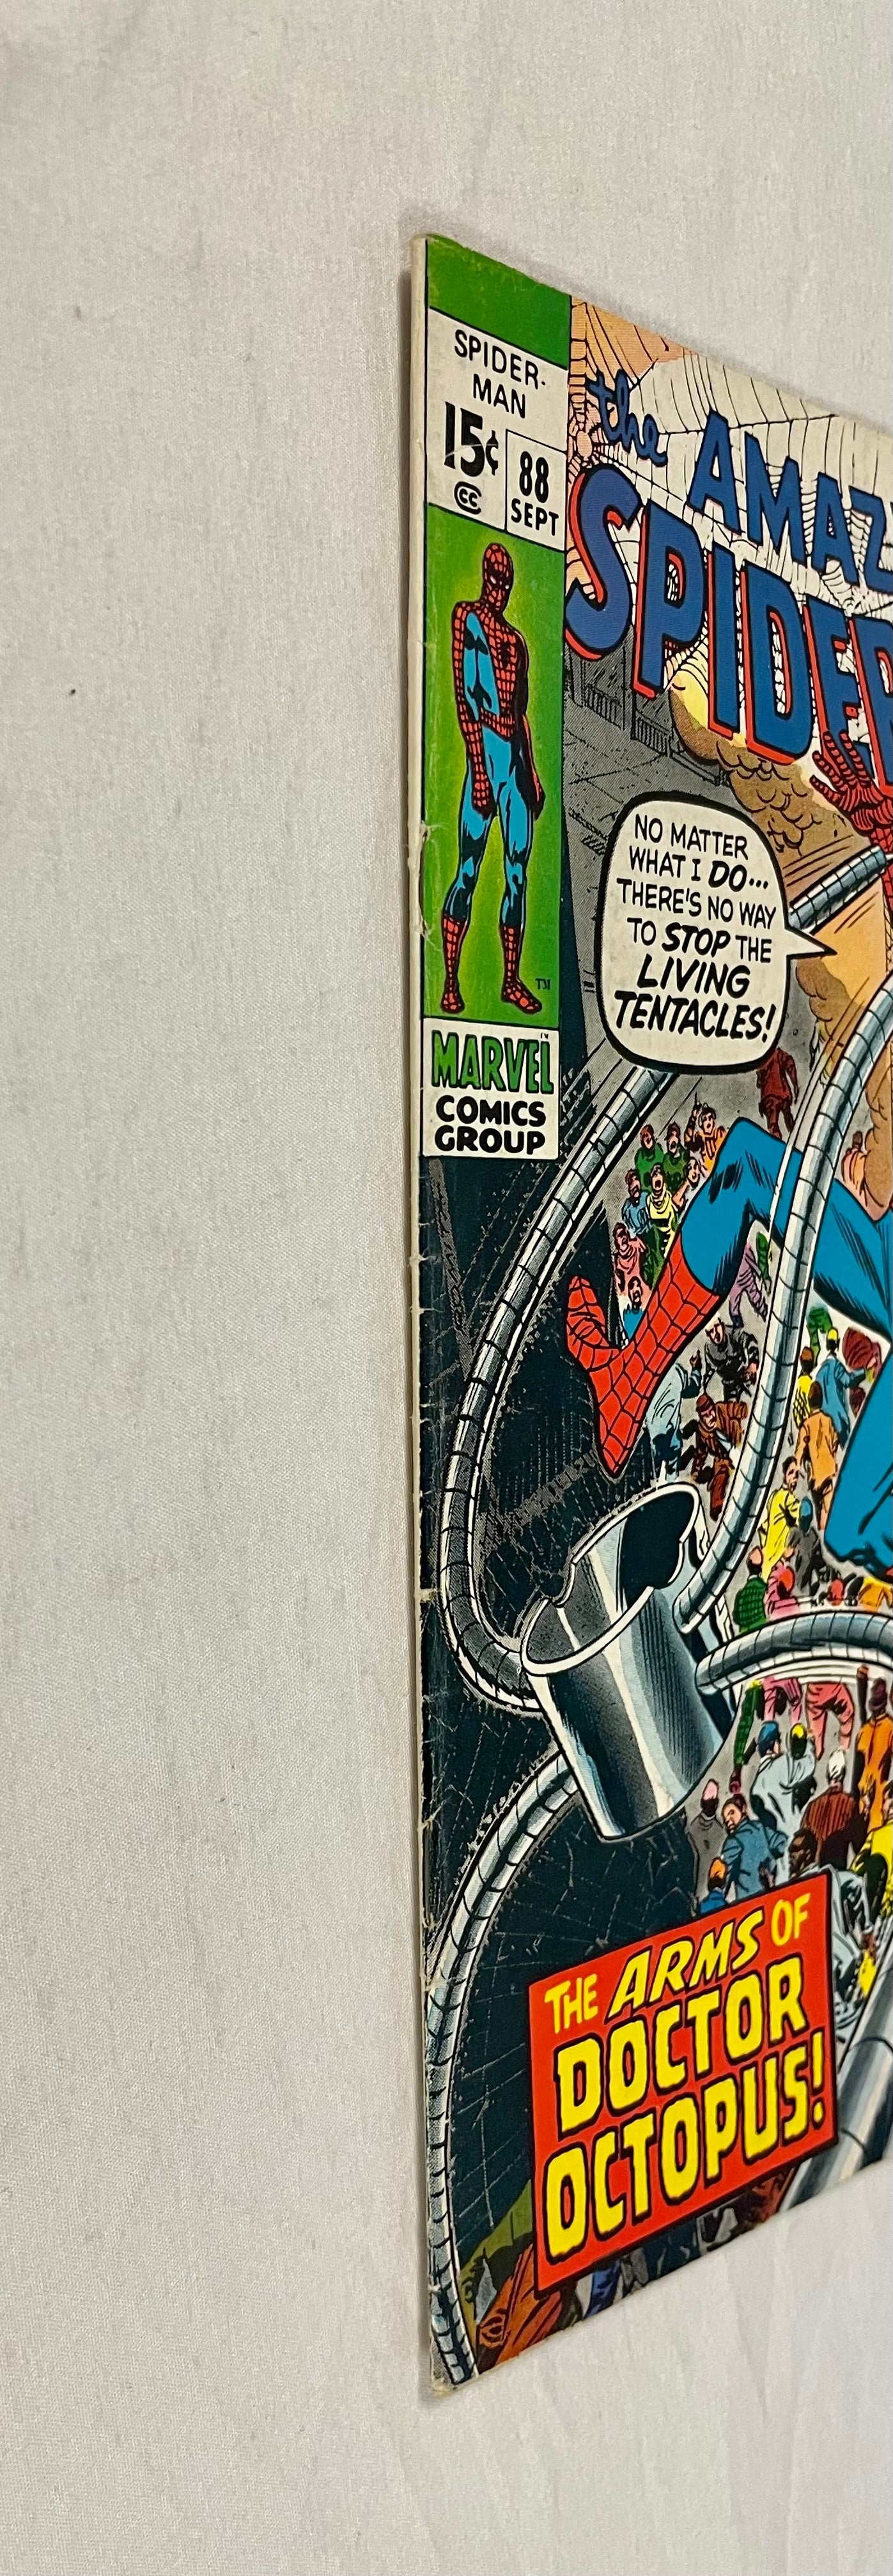 Marvel Comics The Amazing Spider-Man #88